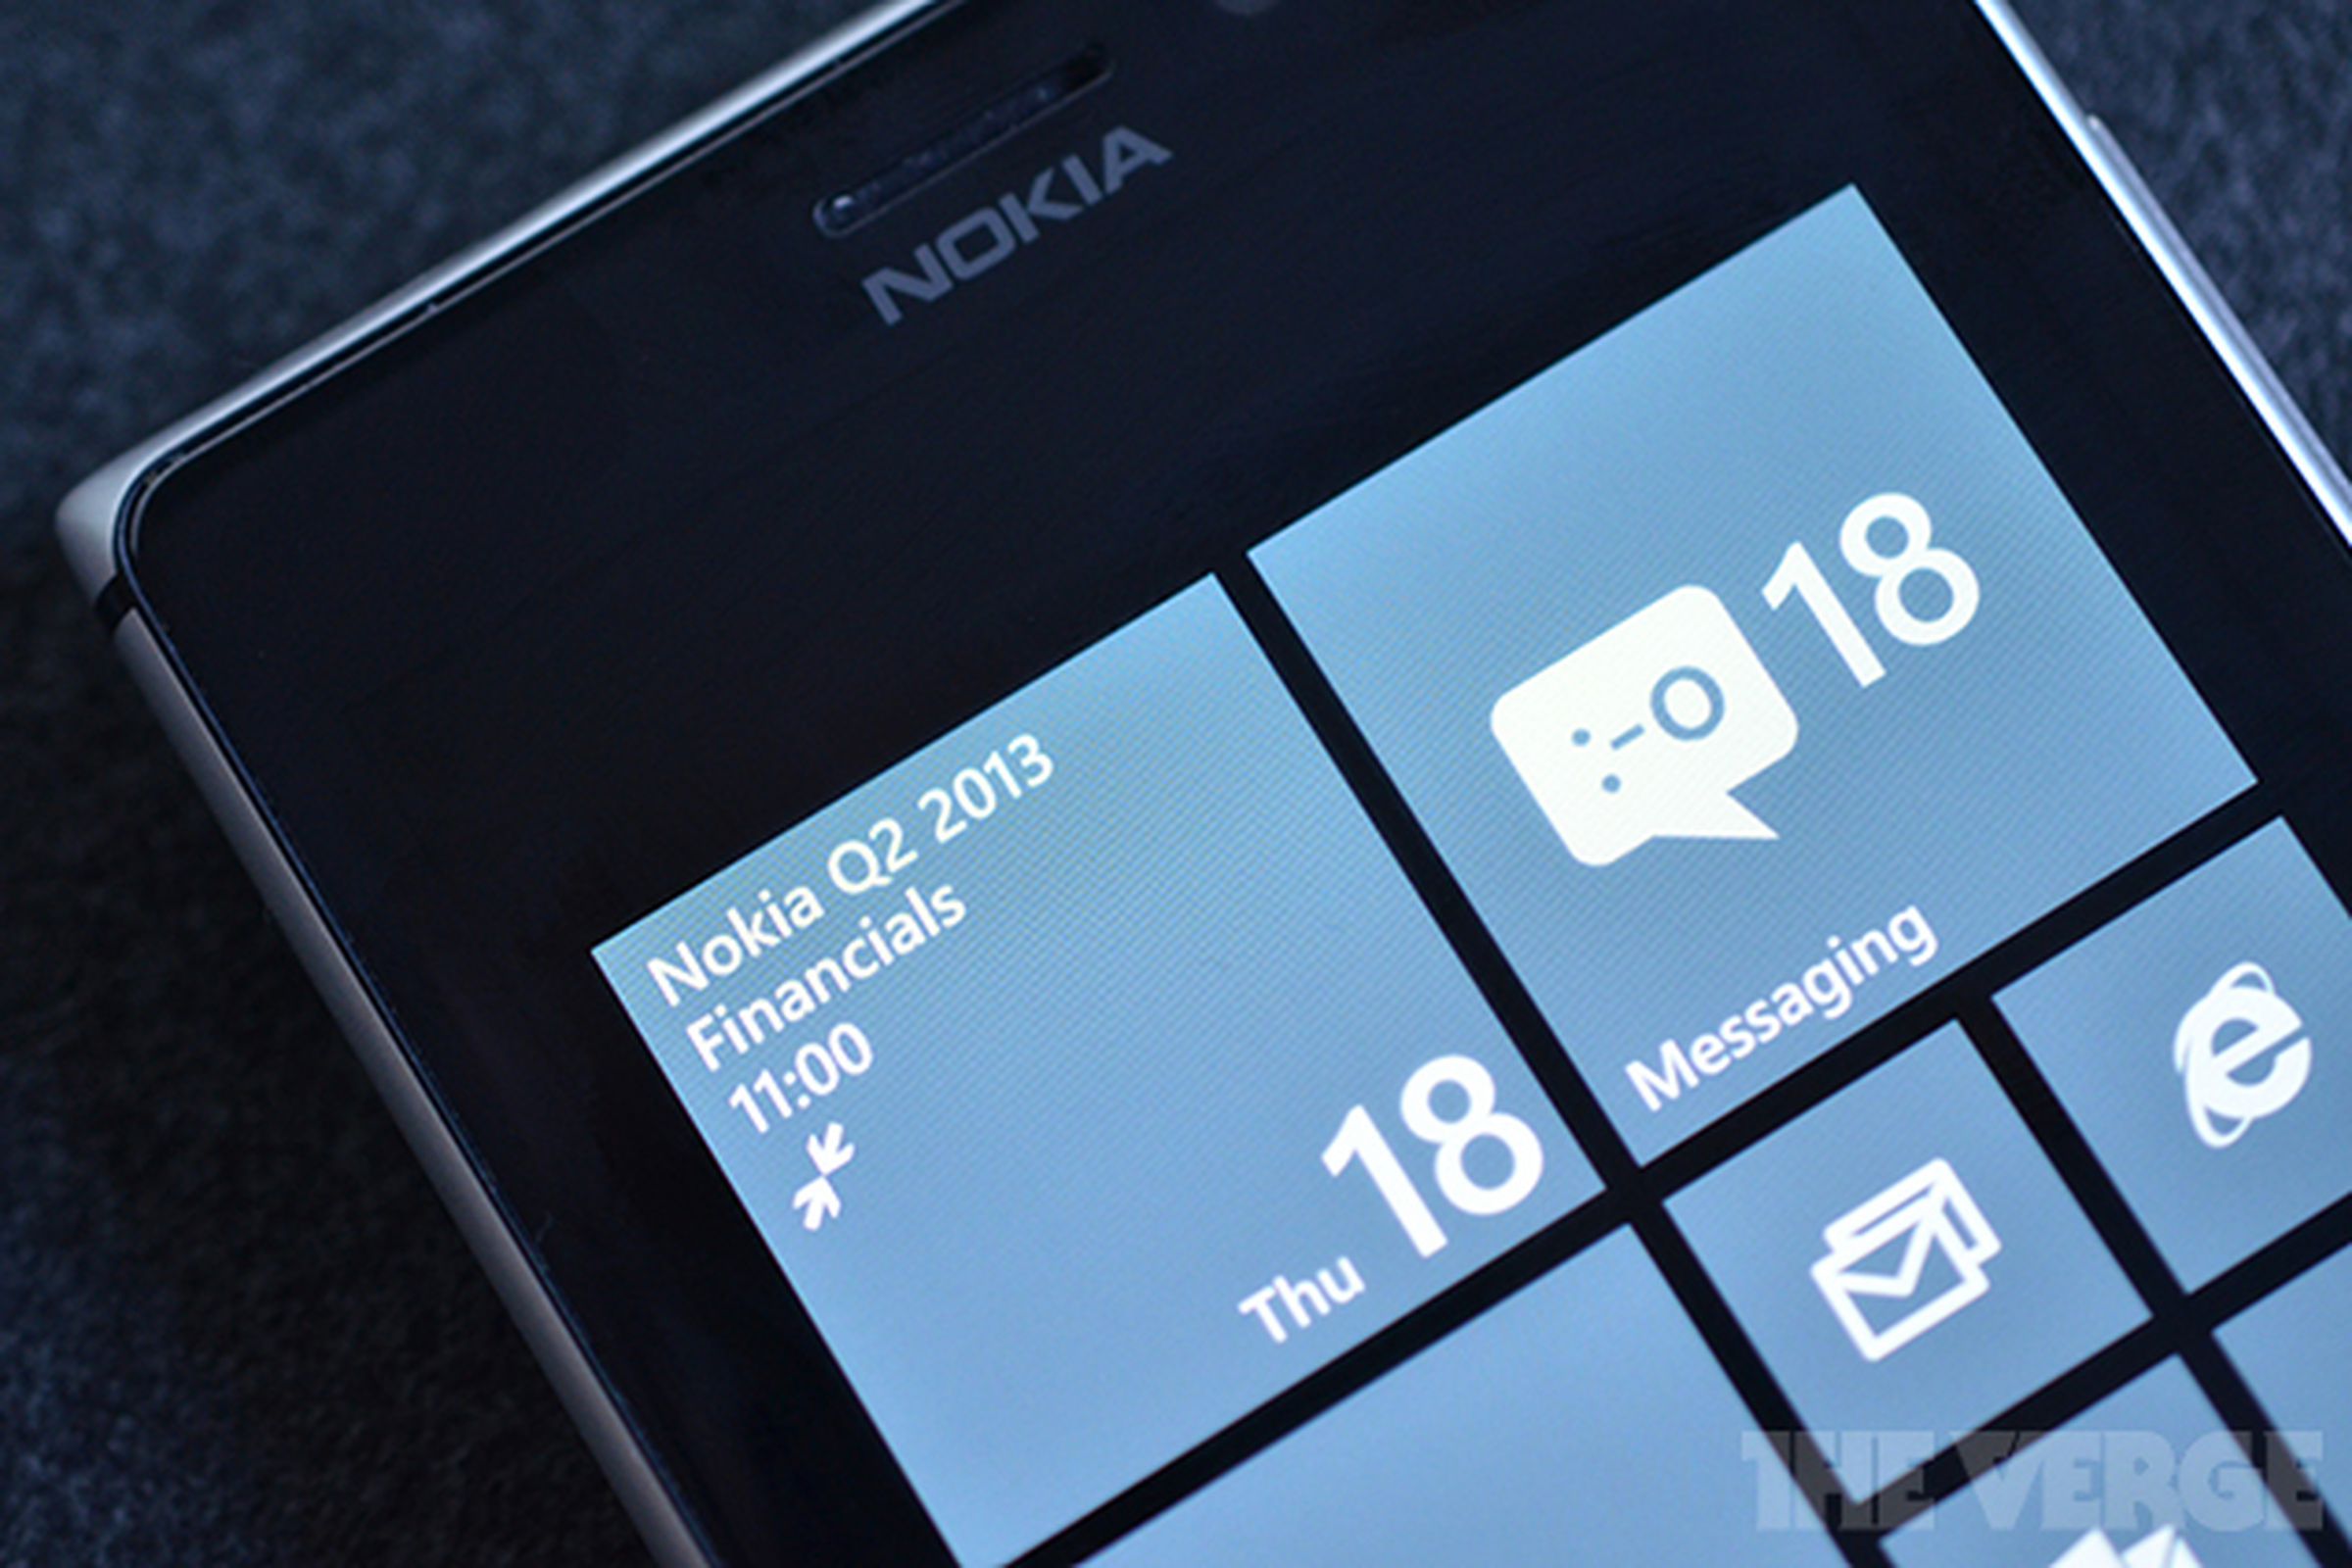 Nokia Q2 earnings 2013